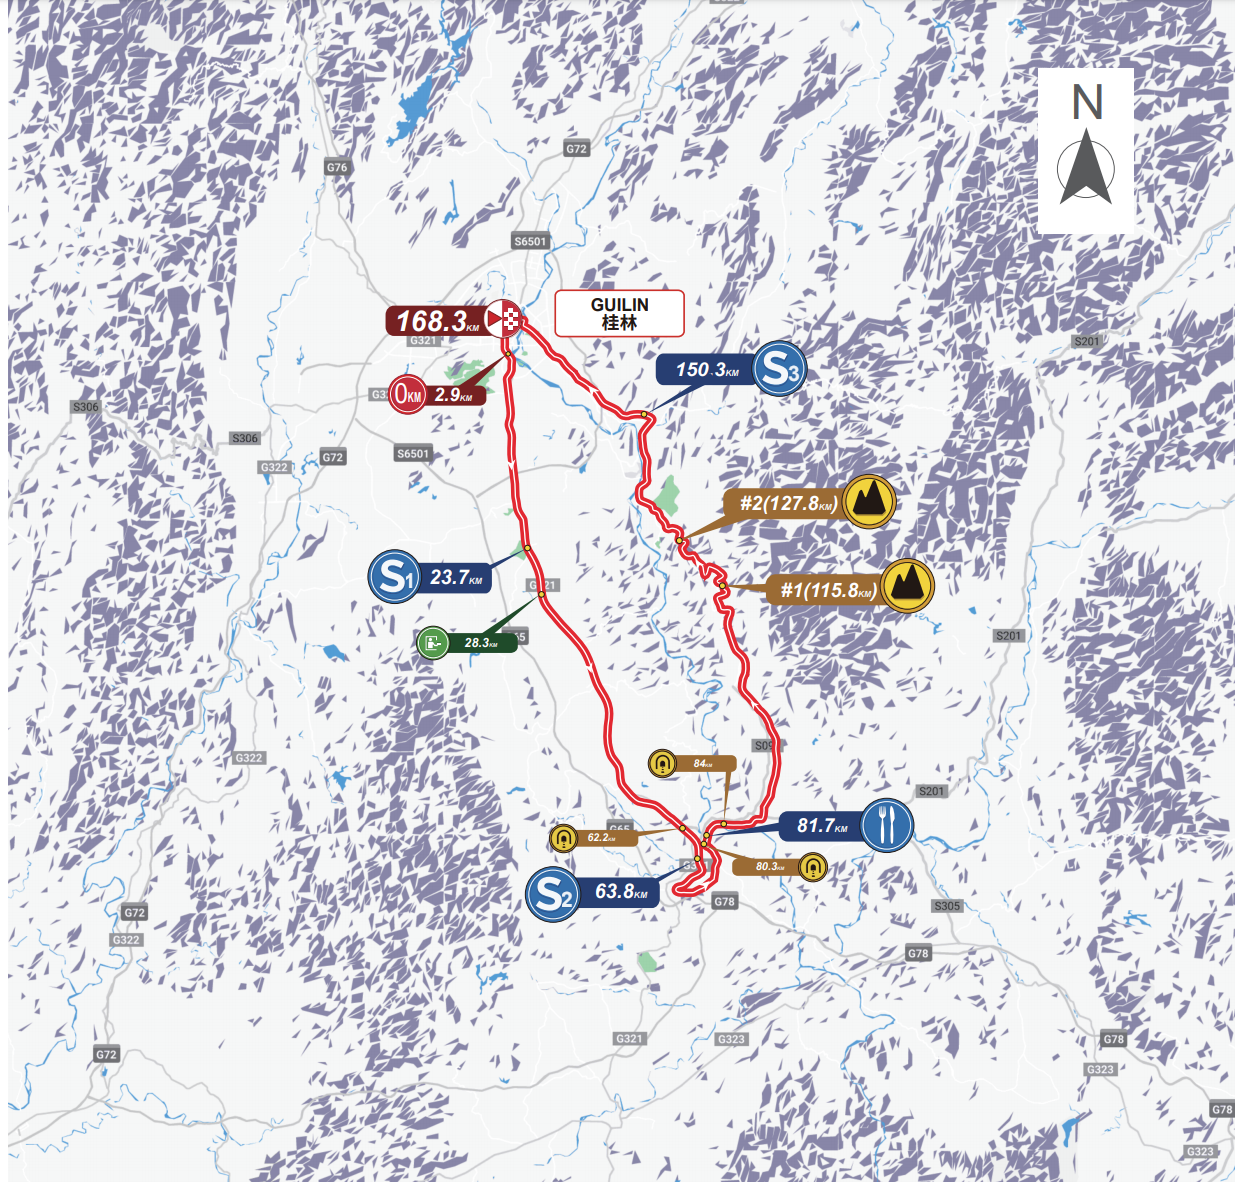 Streckenverlauf Gree-Tour of Guangxi 2019 - Etappe 6